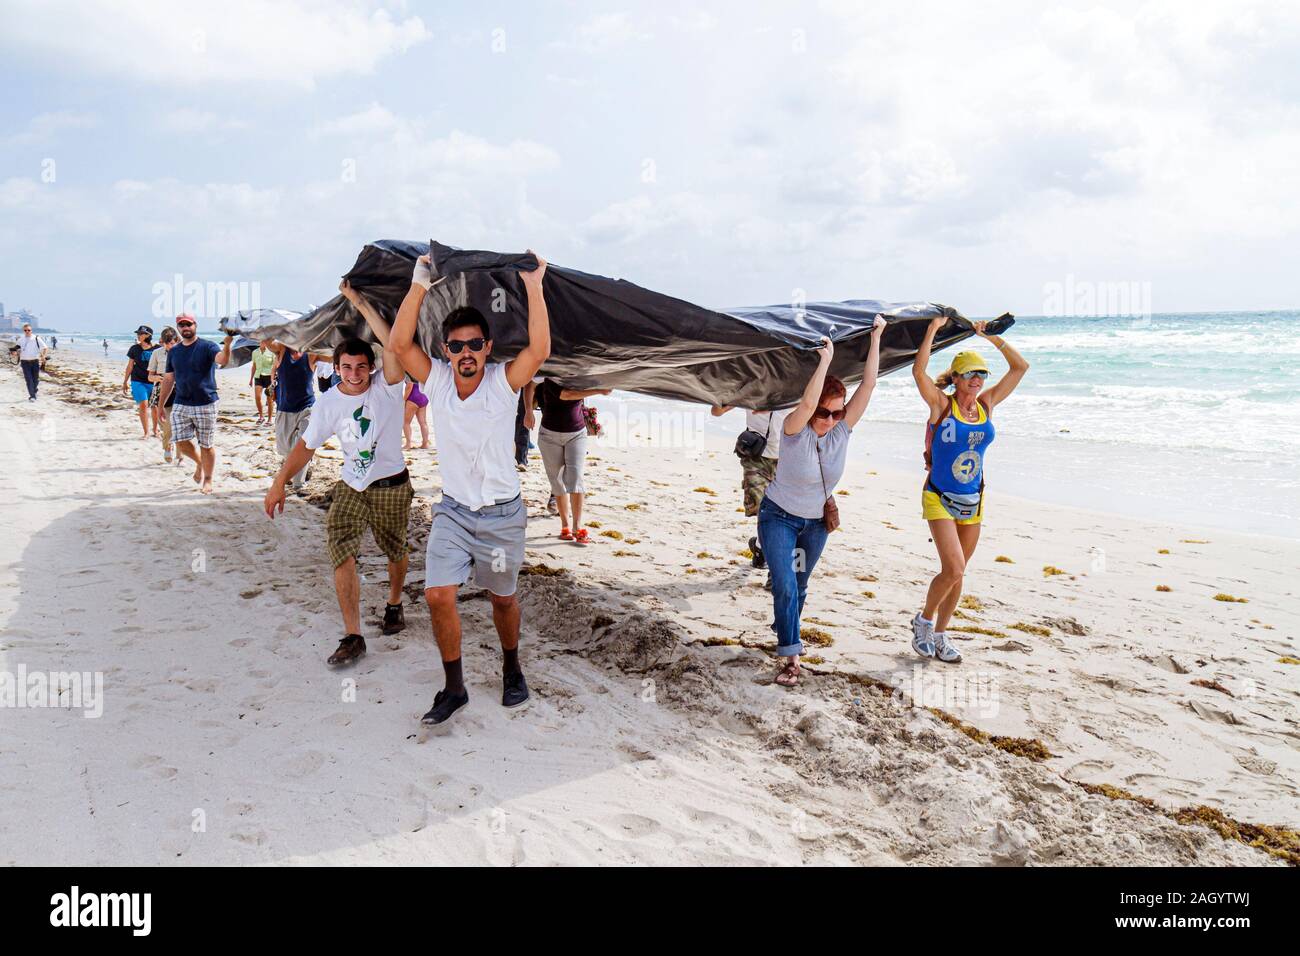 Miami Beach Florida, protesta por derrames de petróleo, perforación en alta mar, lámina de plástico negro representa a la polla, Océano Atlántico, agua, hombre hispano hombres varones,FL100515040 Foto de stock